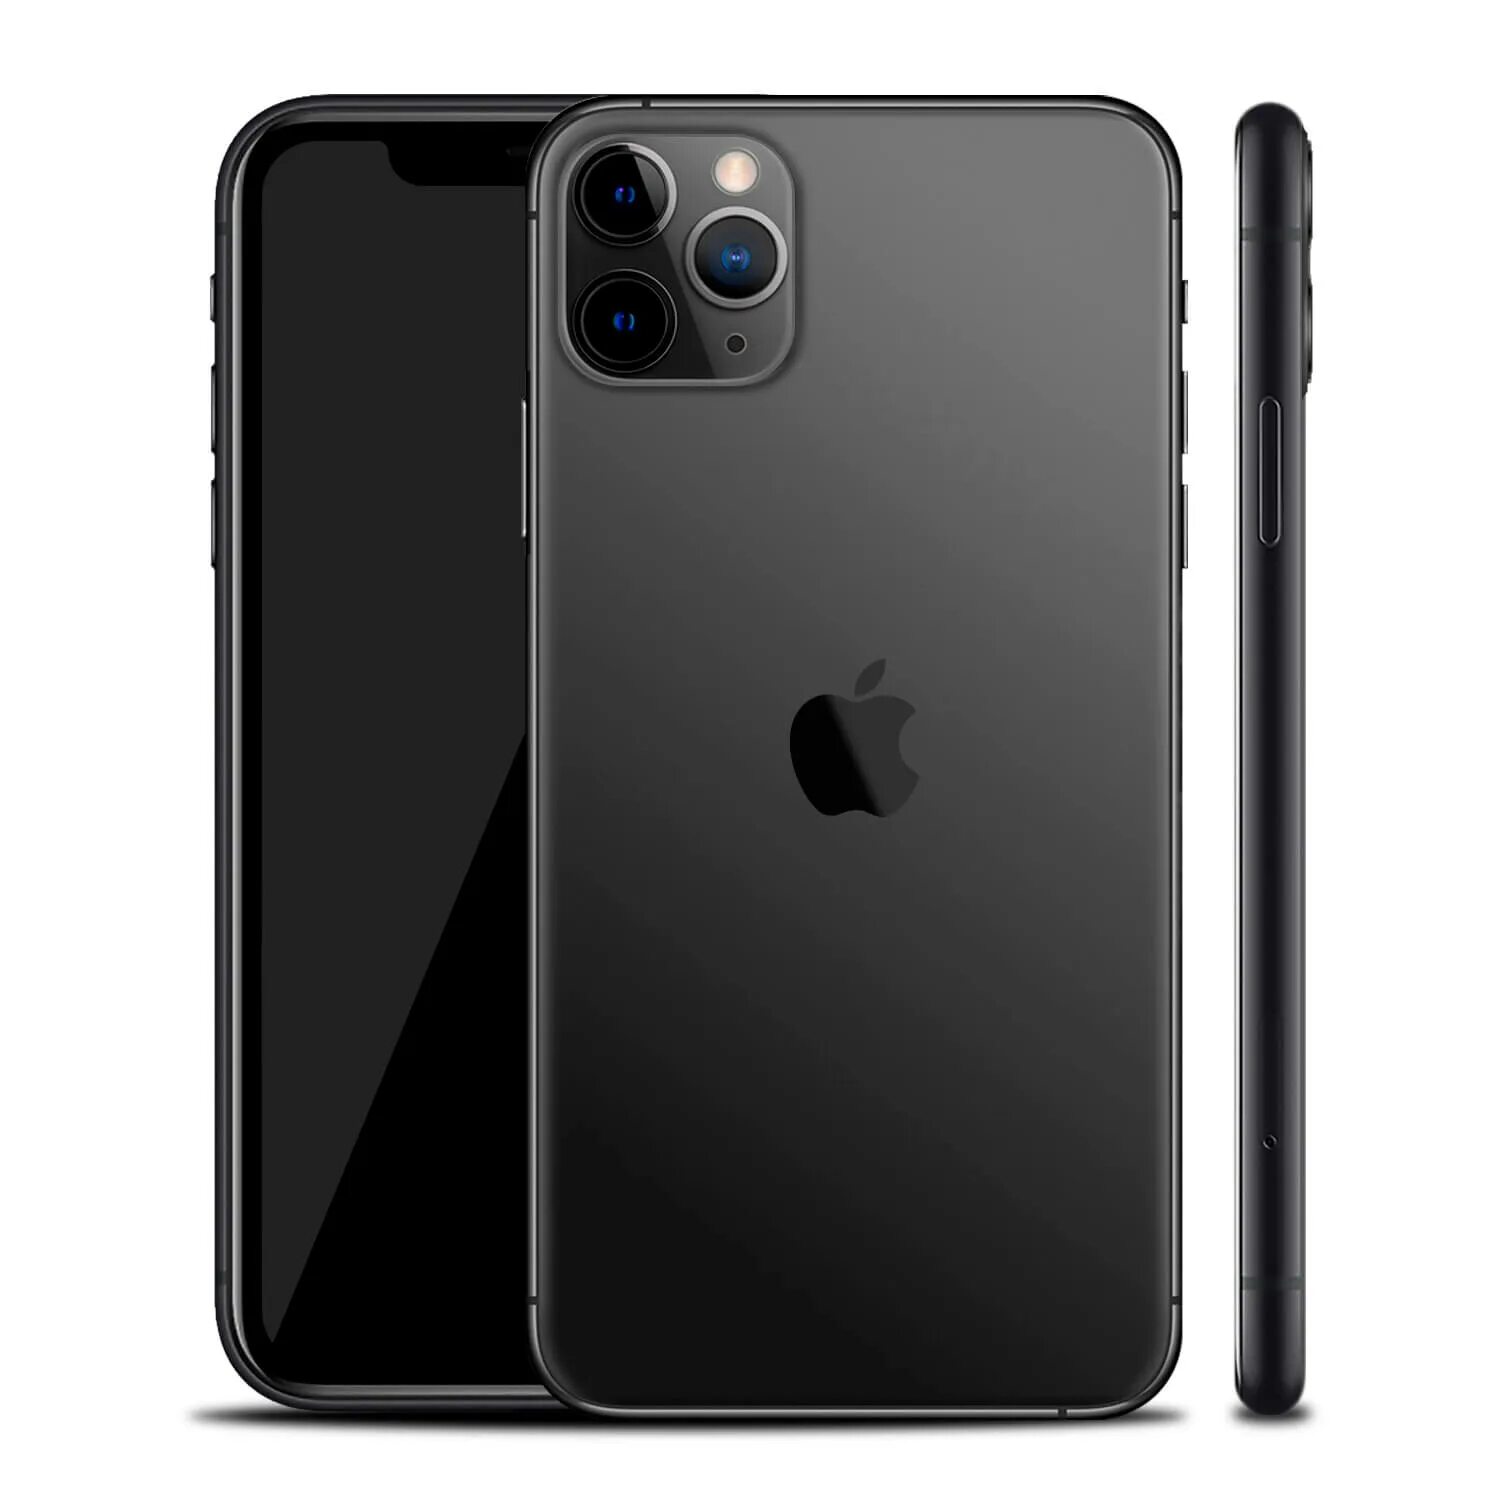 Айфон 11 про черный. Iphone 11 Pro Max Black. Iphone 11 64gb Black. Iphone 11 Pro Max 256gb черный. Iphone 11 Pro 64gb.